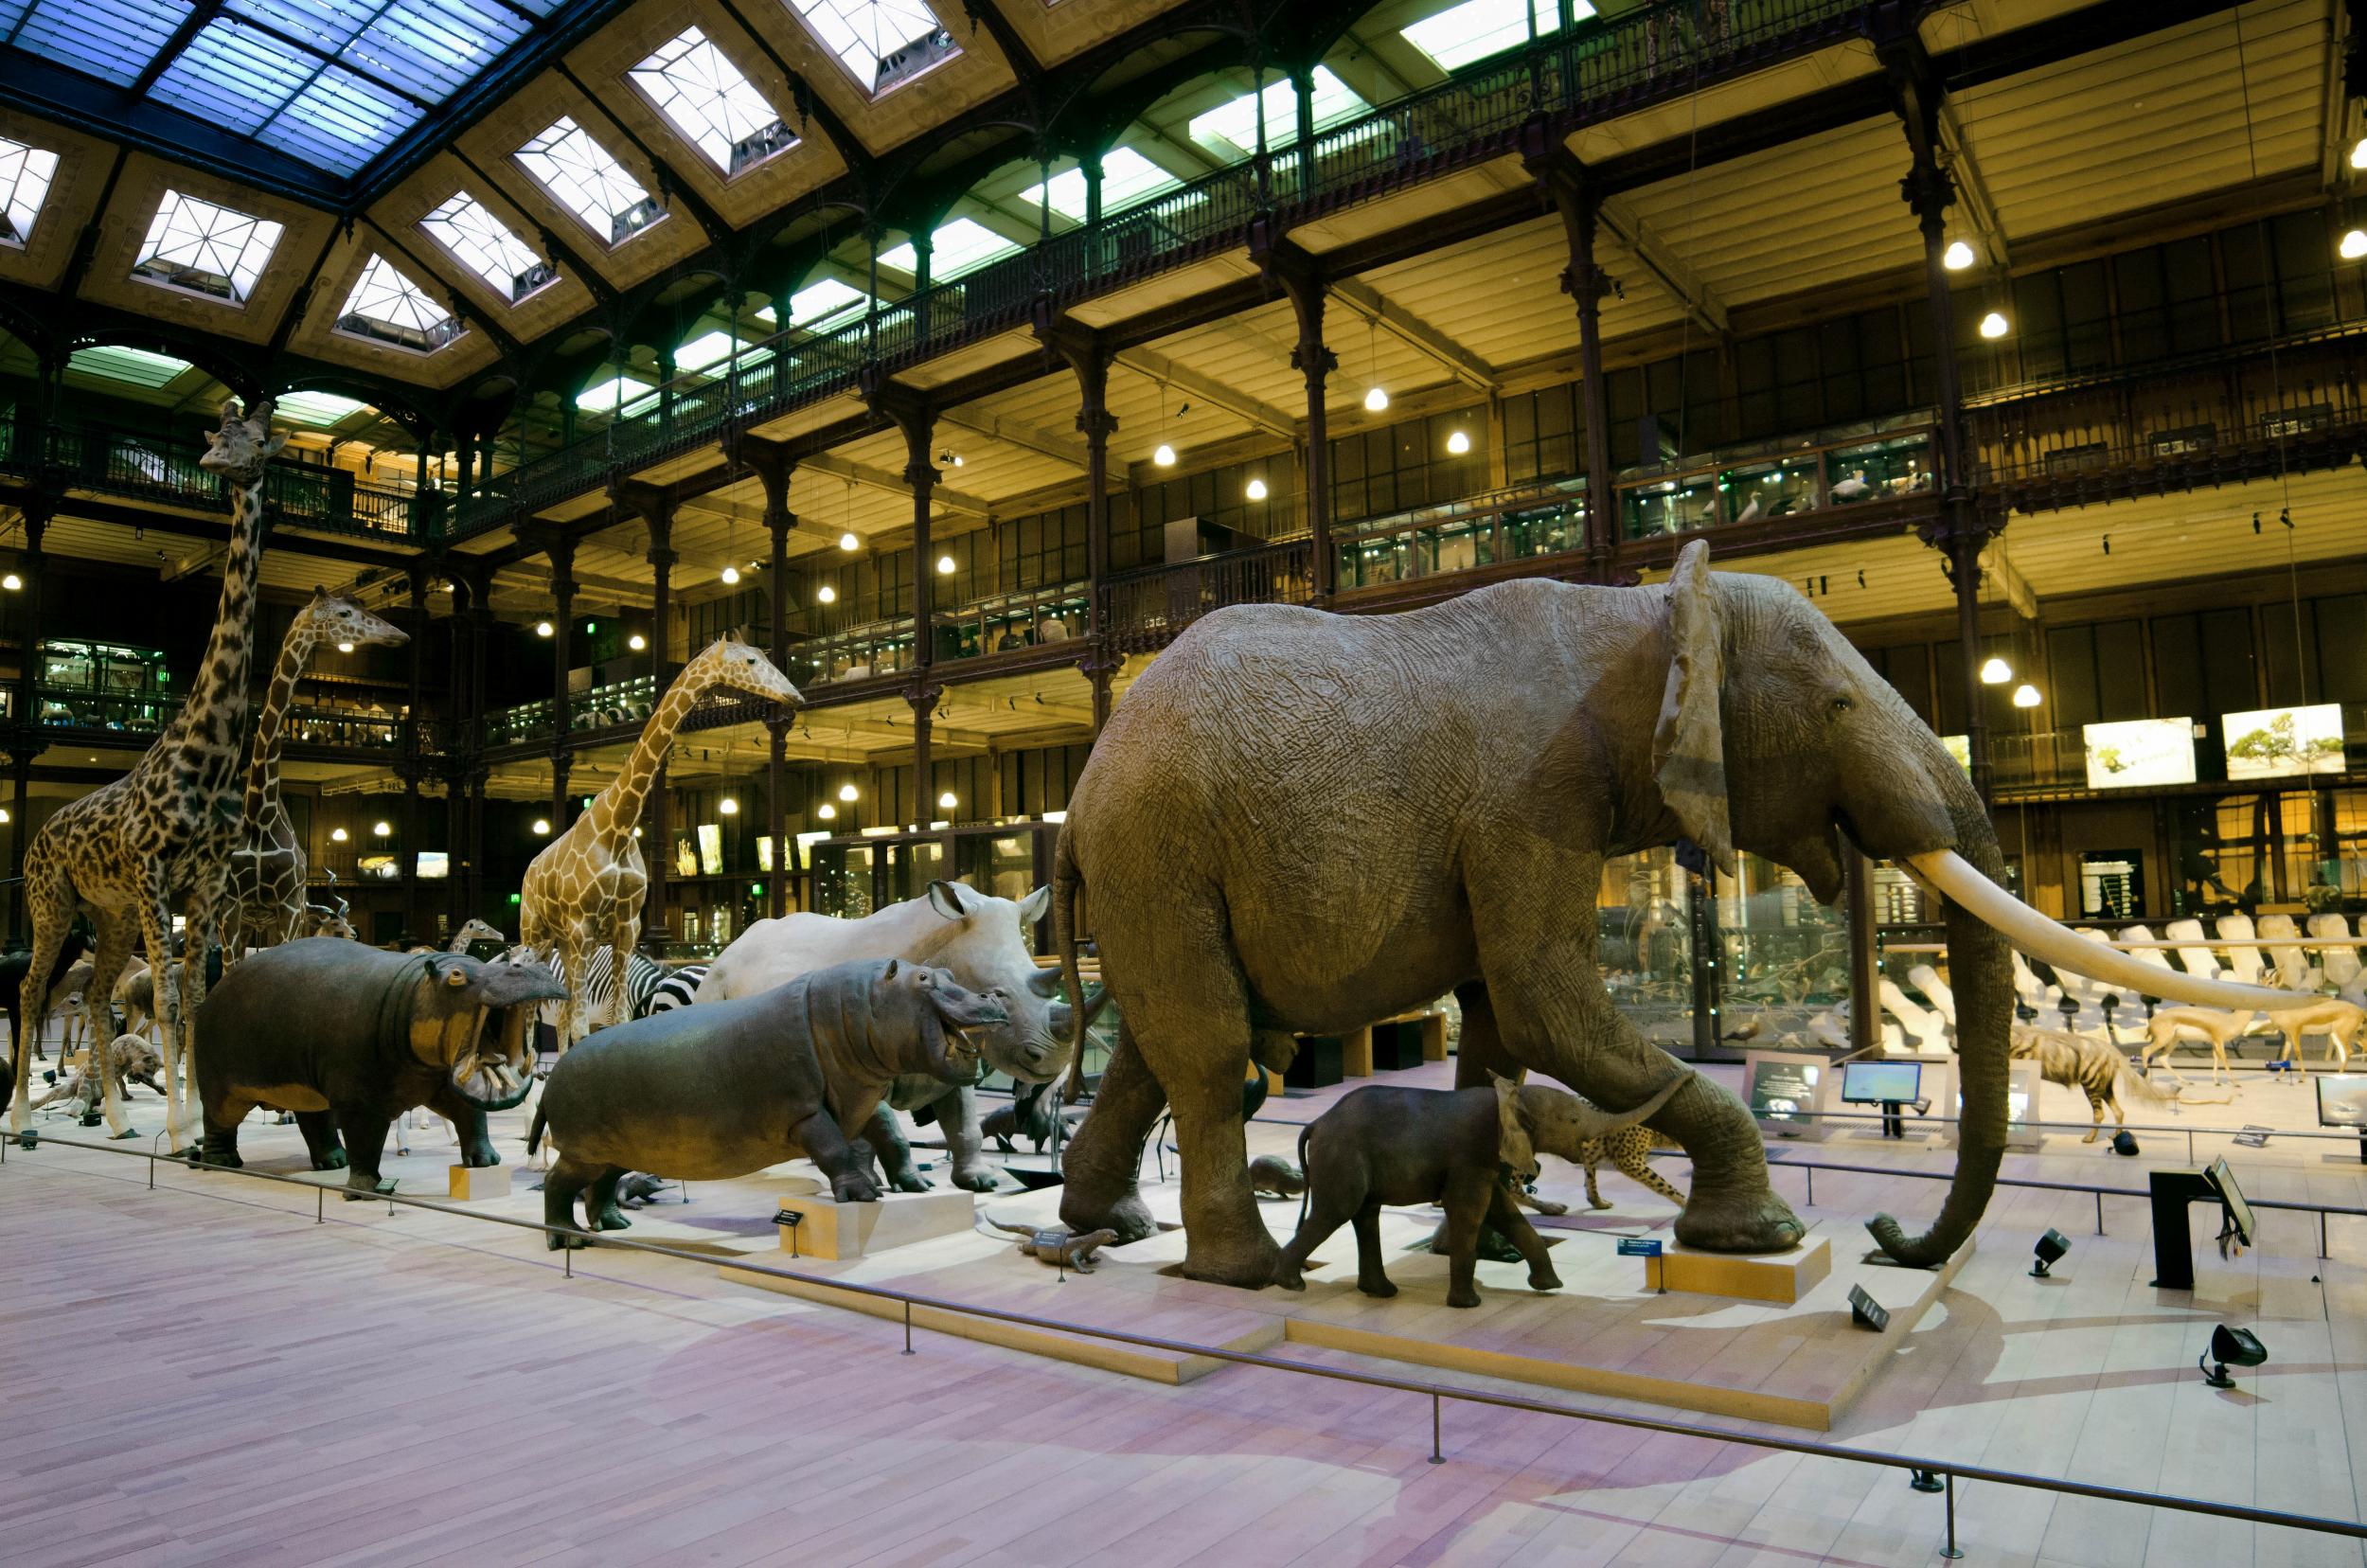 The animals inside the Grande Galerie de L’Evolution